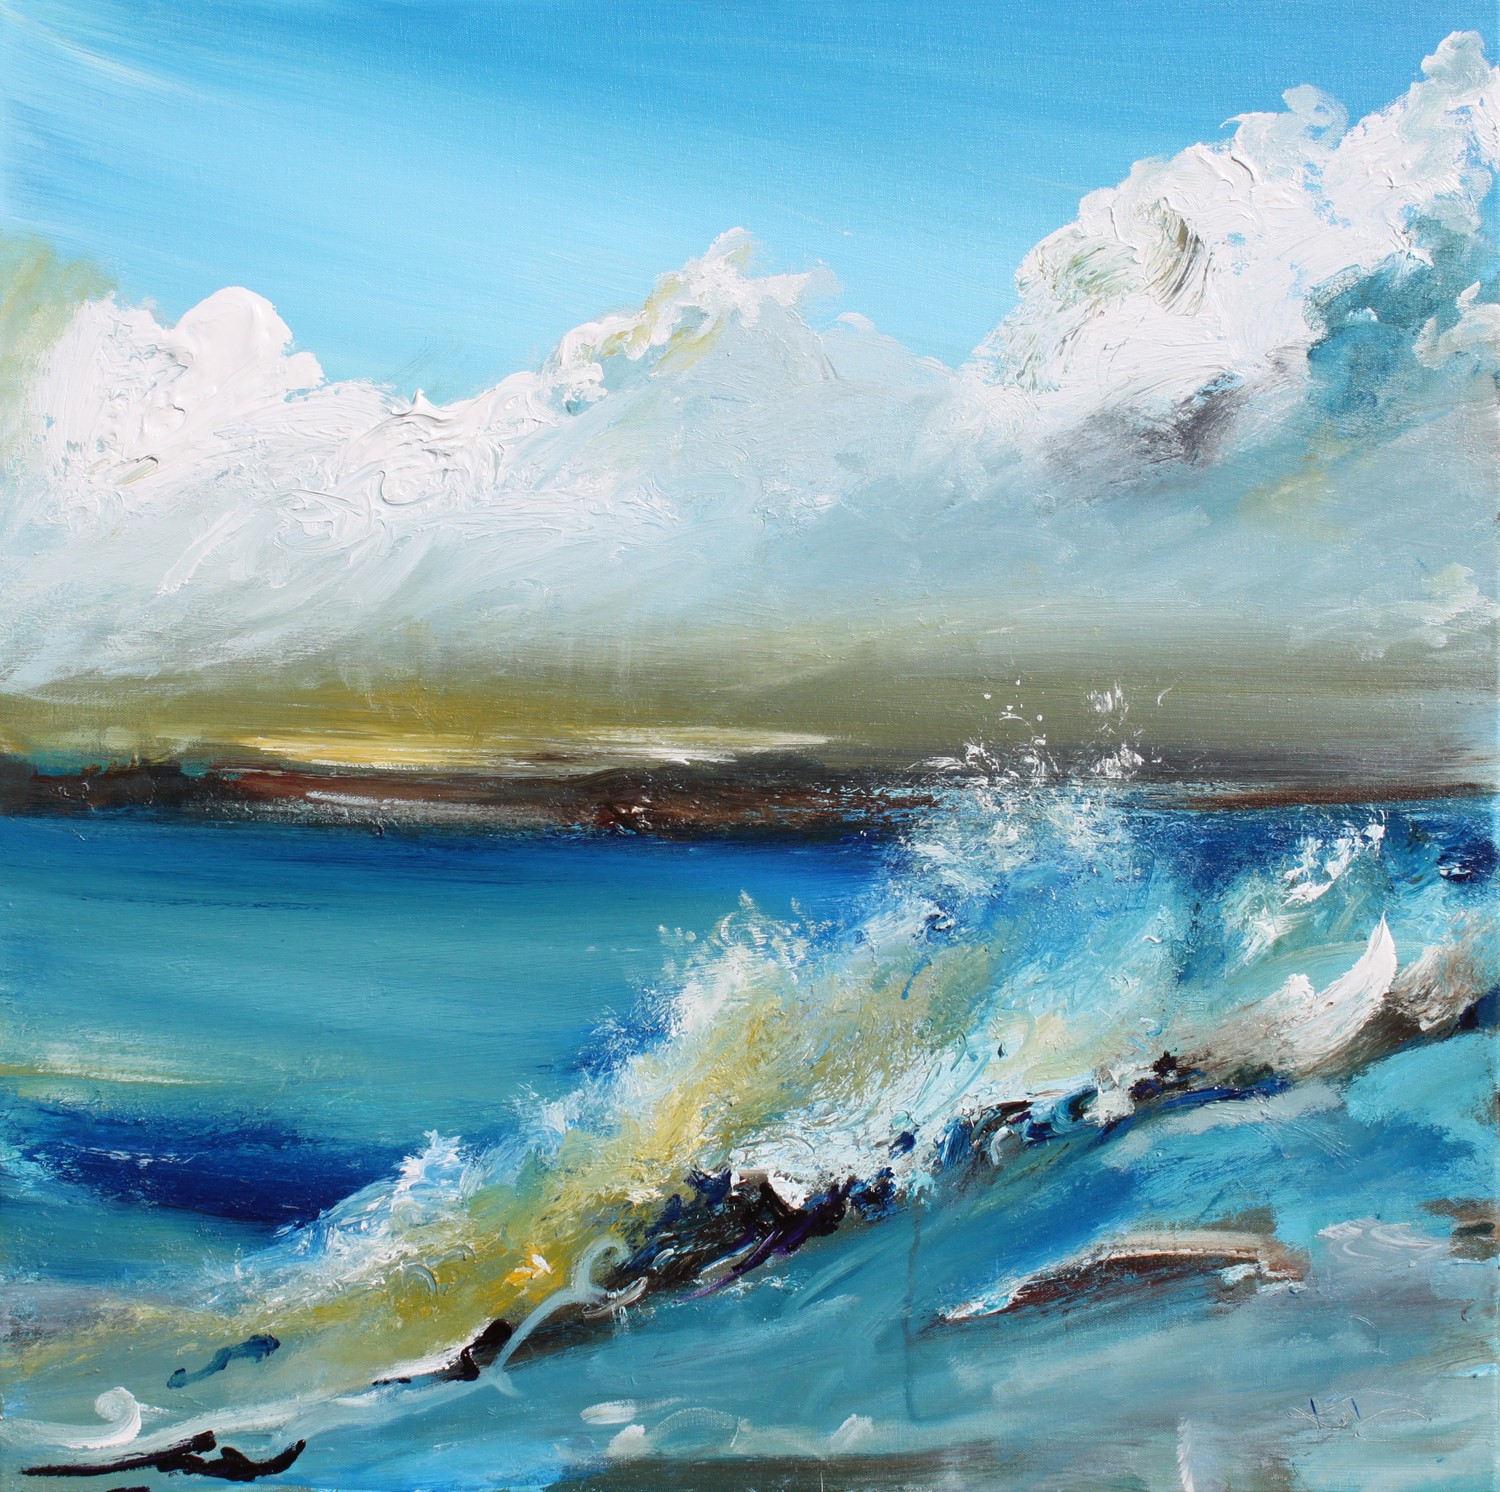 'Surging Wave' by artist Rosanne Barr